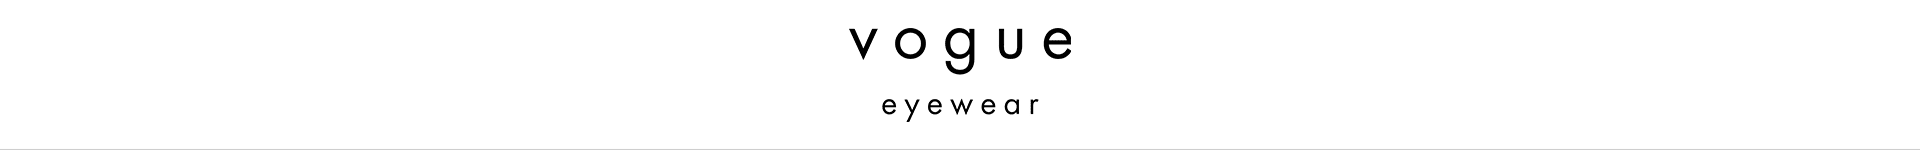 Shop Vogue Prescription Sunglasses